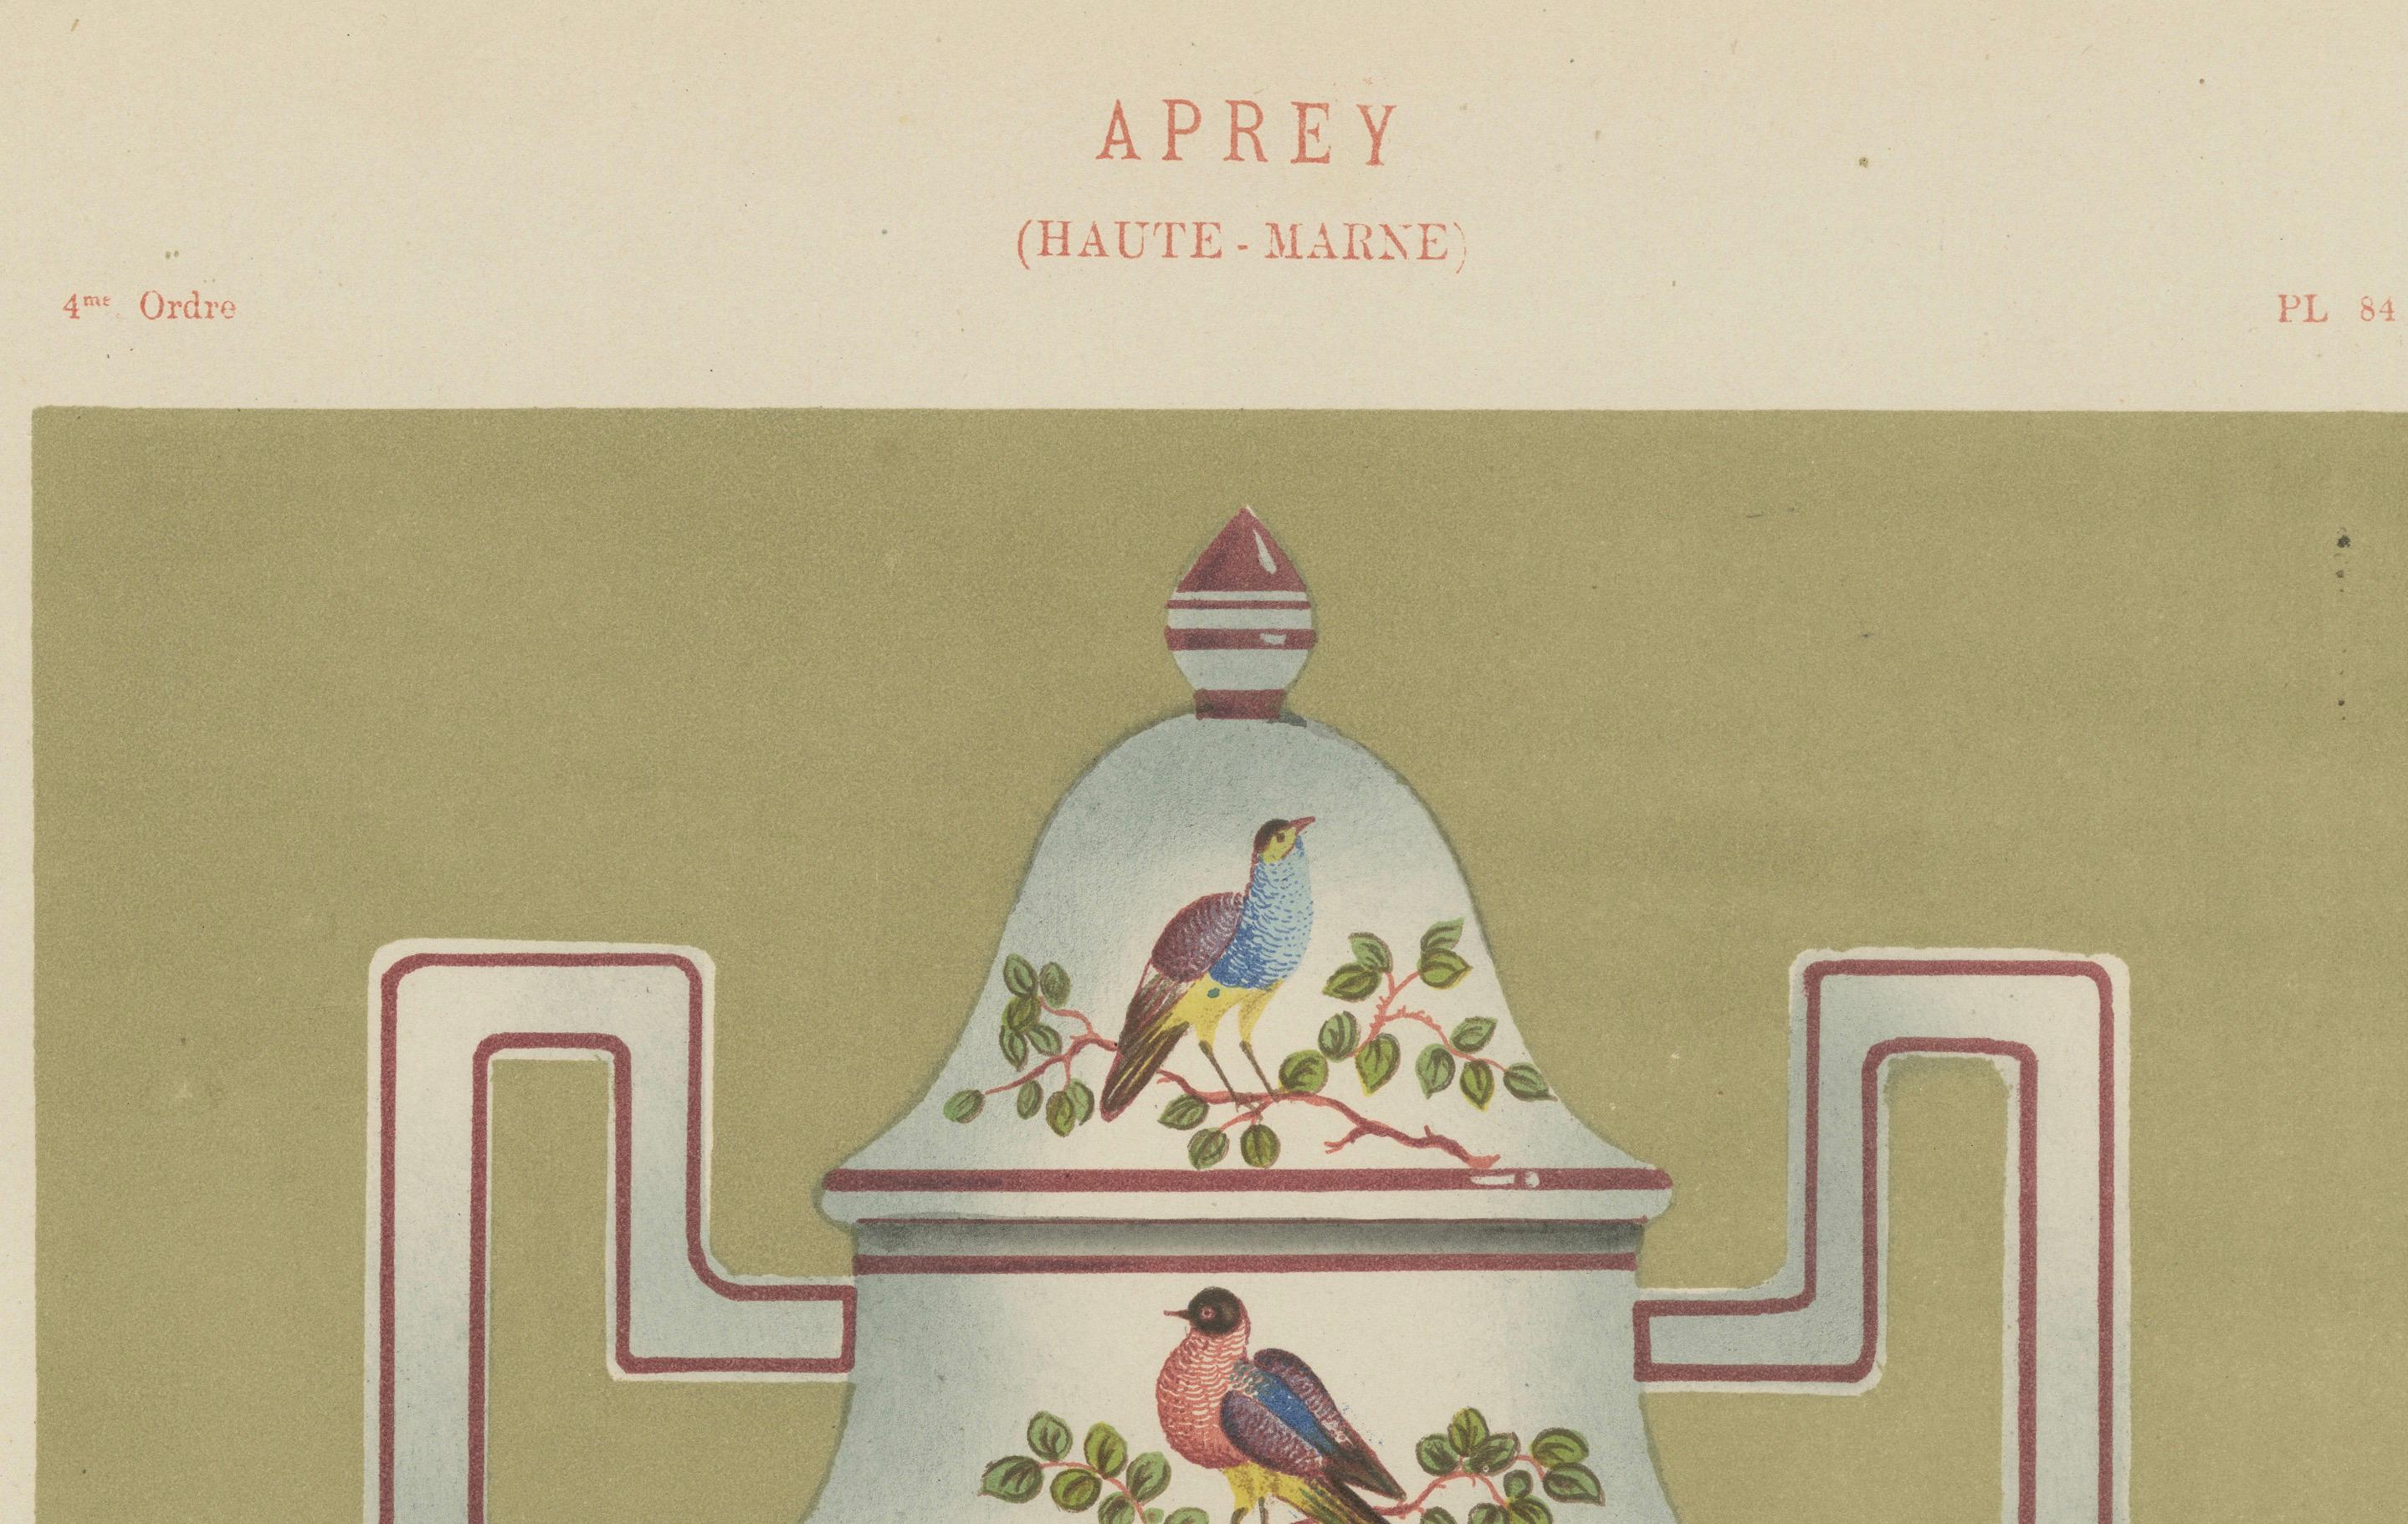 Late 19th Century Aprey Aviary: Ceramic Vase Chromolithograph - Plate 54, 1874 For Sale